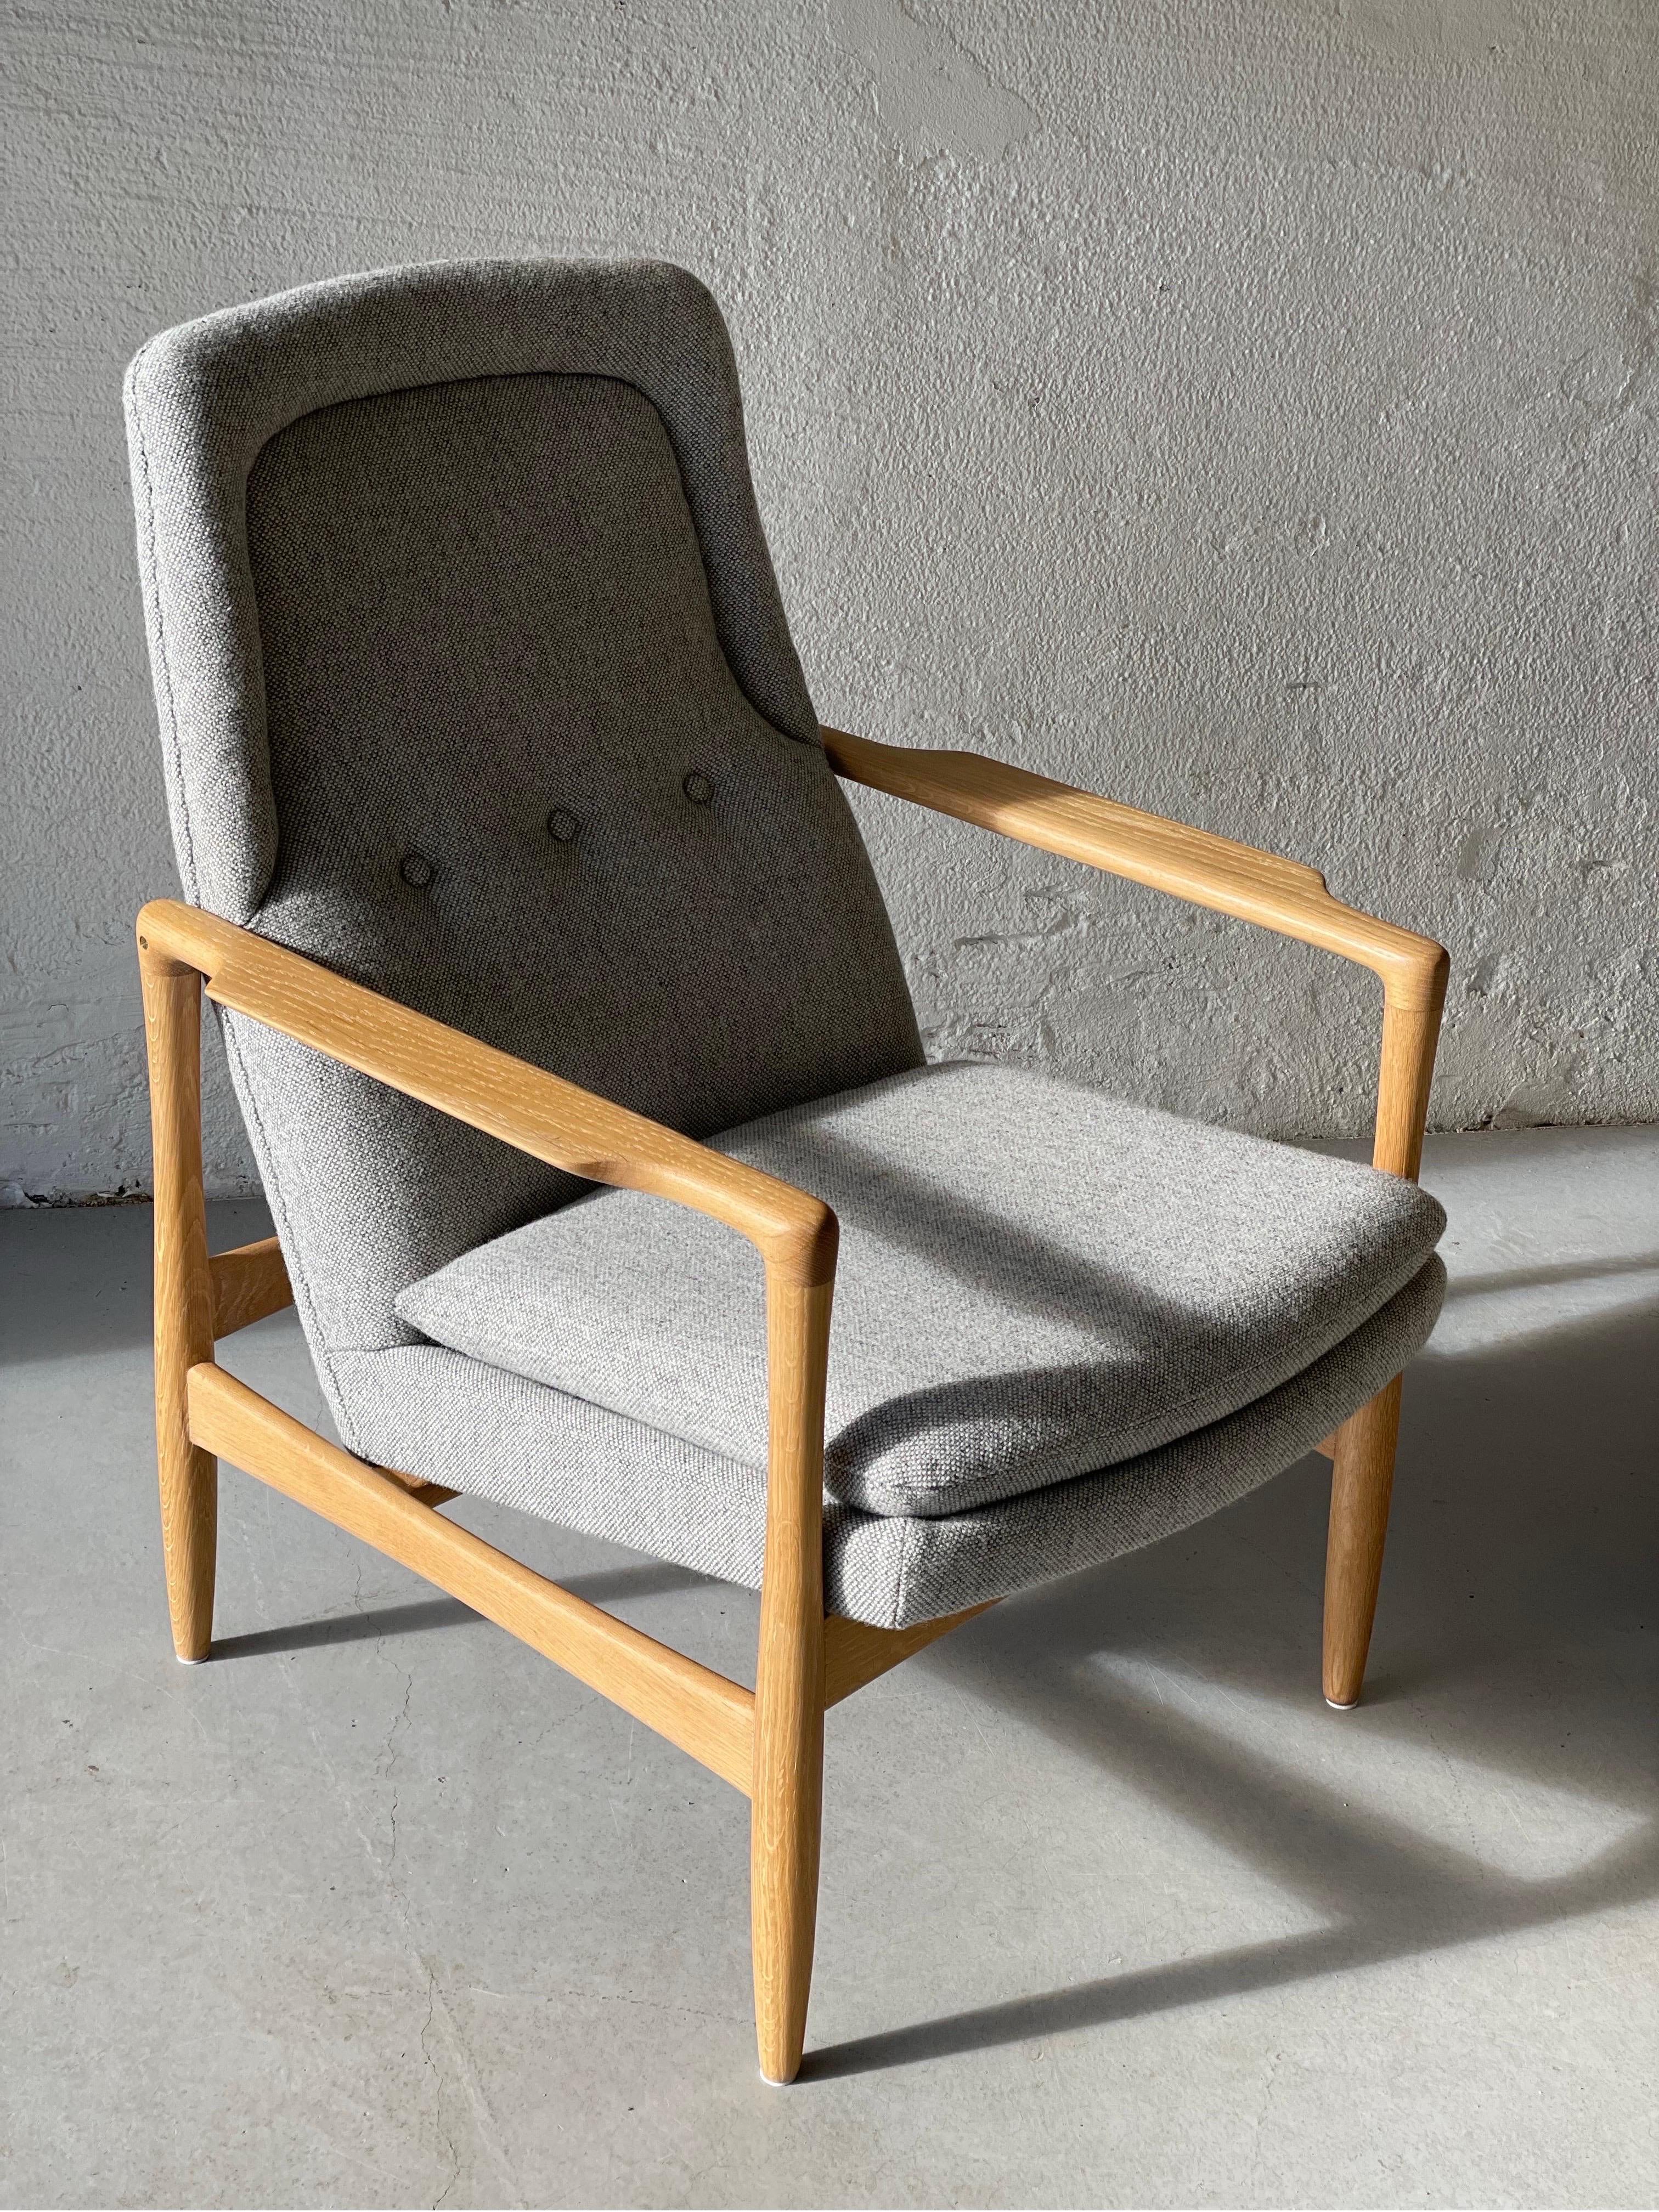 19th Century Norwegian Midcentury - Modern chairs, Torbjørn Afdal, 1957 For Sale